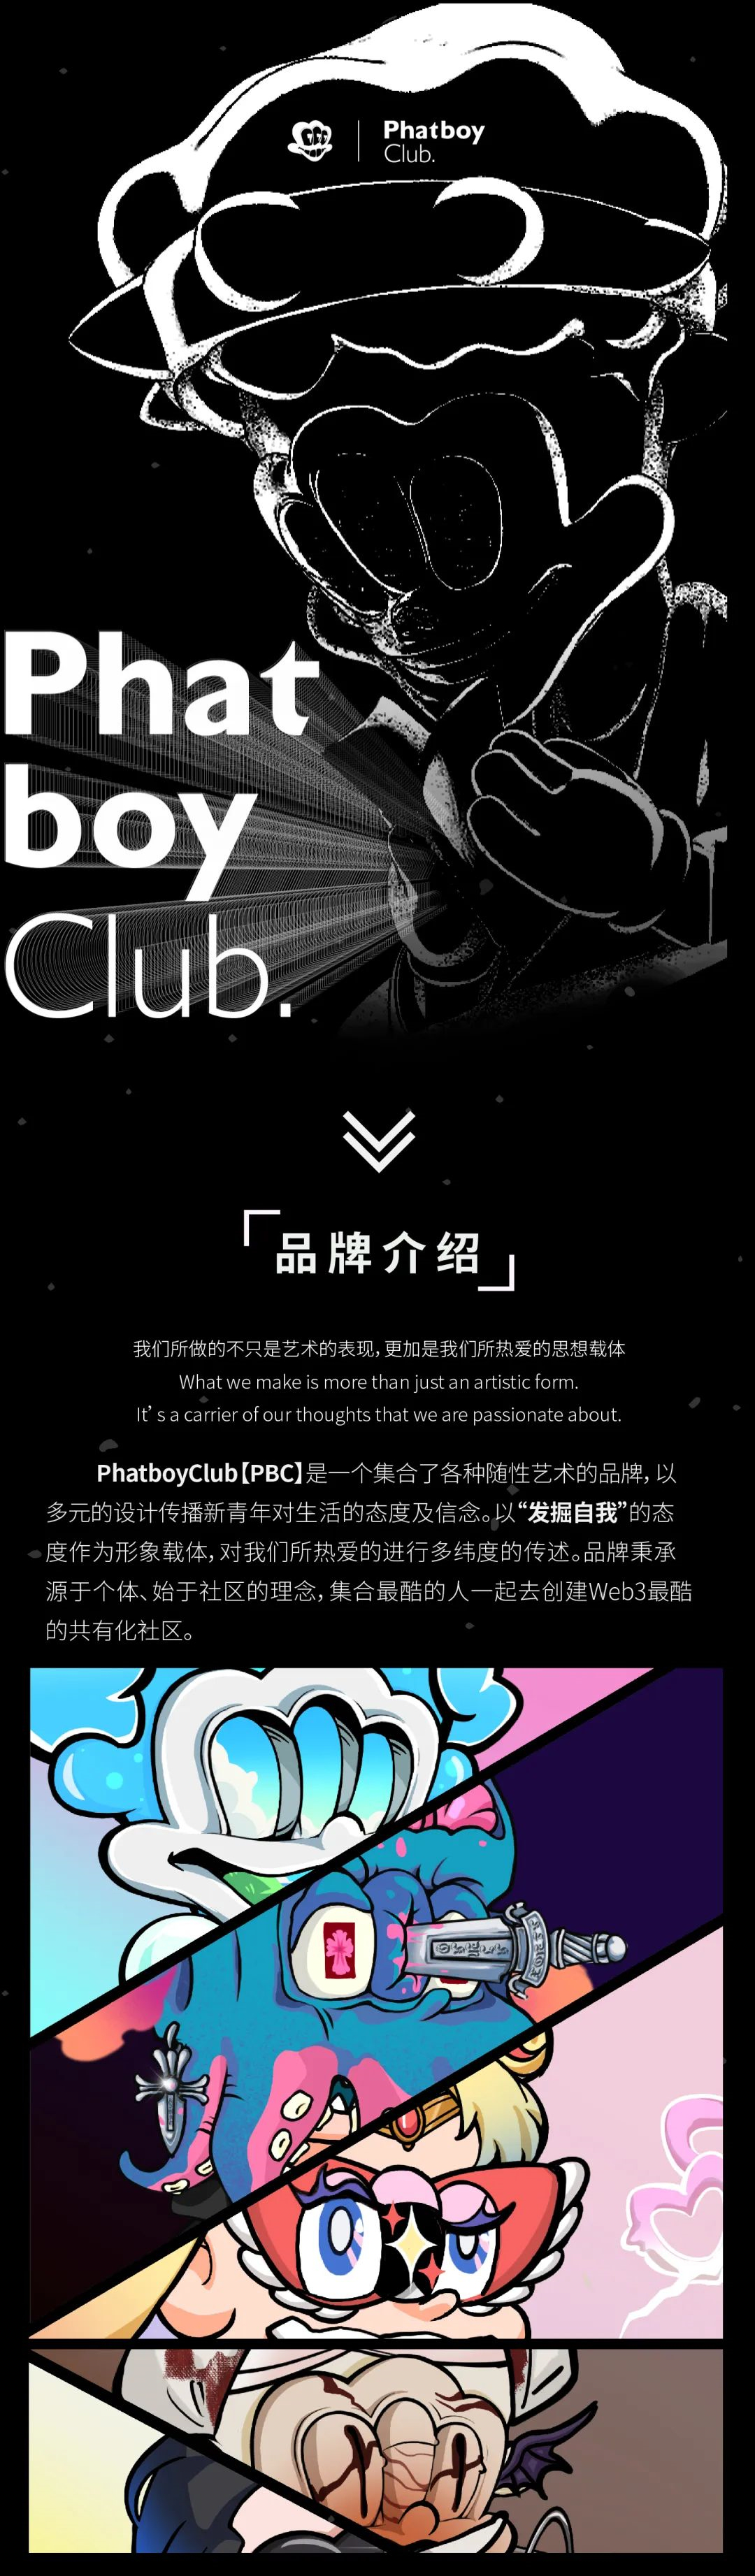 PhatboyClub入驻双镜品牌馆 开启招募委员会